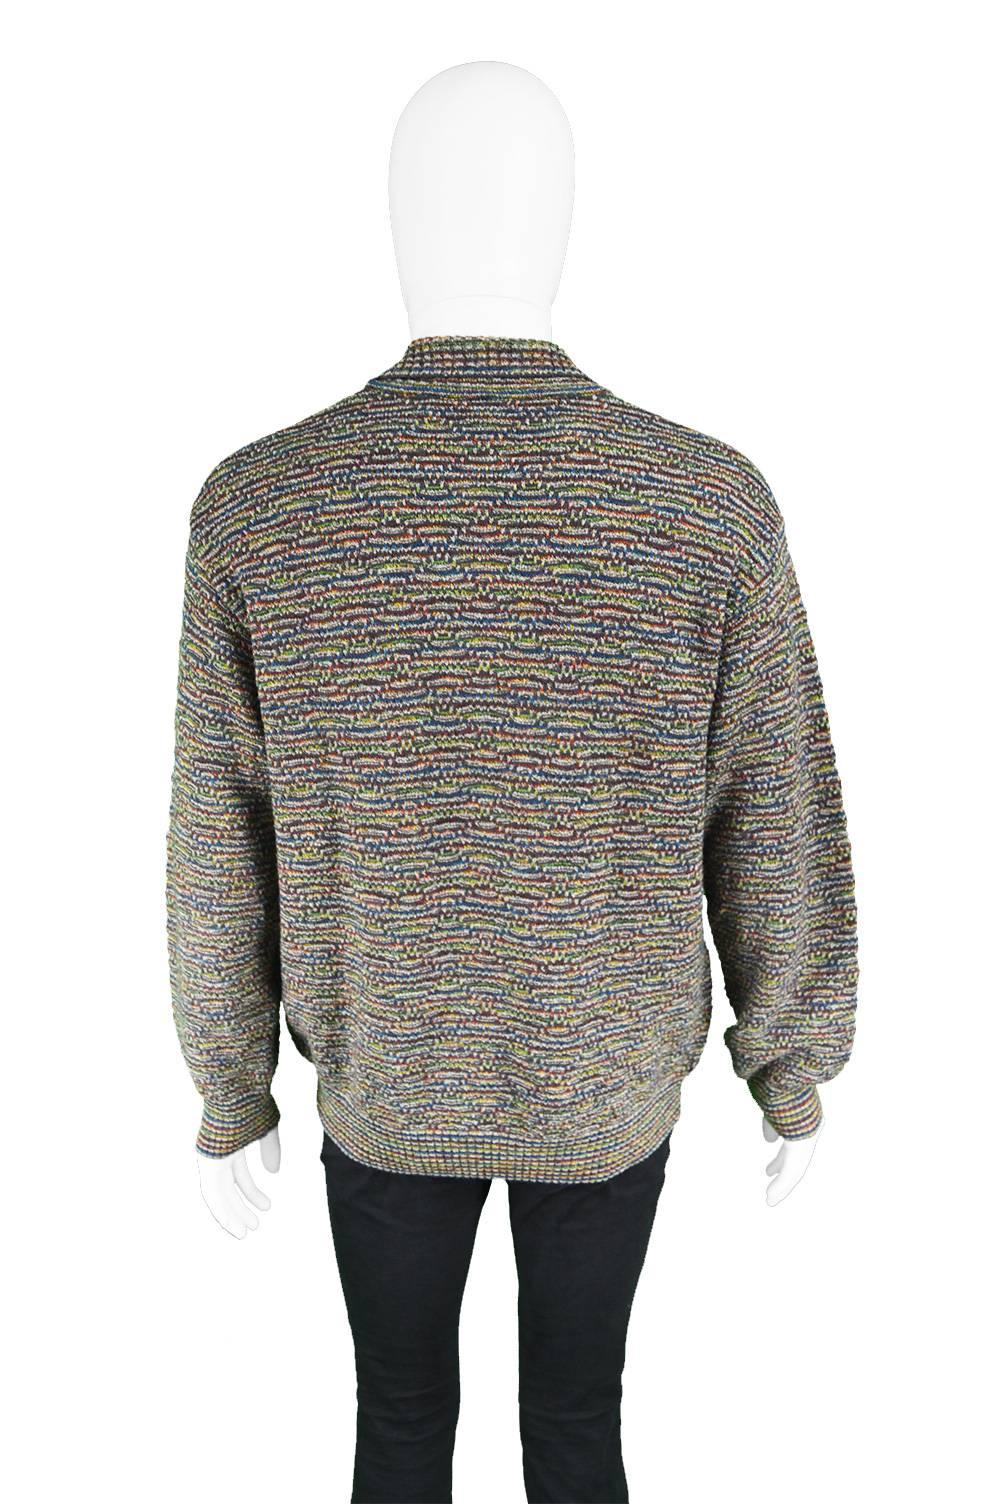 Missoni Men's Vintage Textured Wool, Acrylic & Alpaca Knit Sweater, 1990s For Sale 3